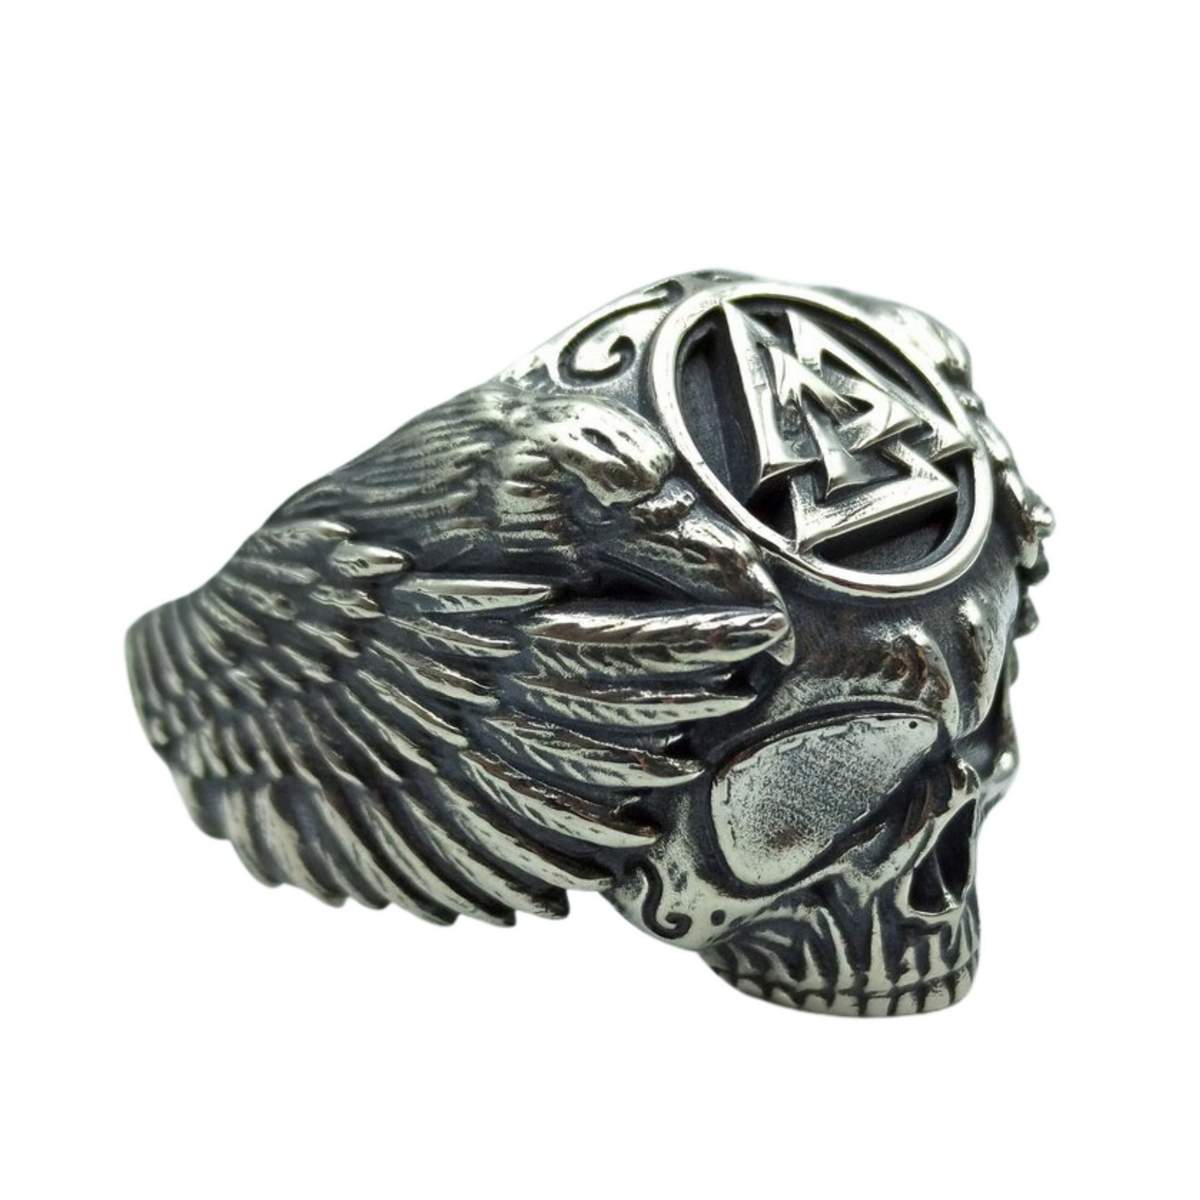 Odin skull silver massive ring